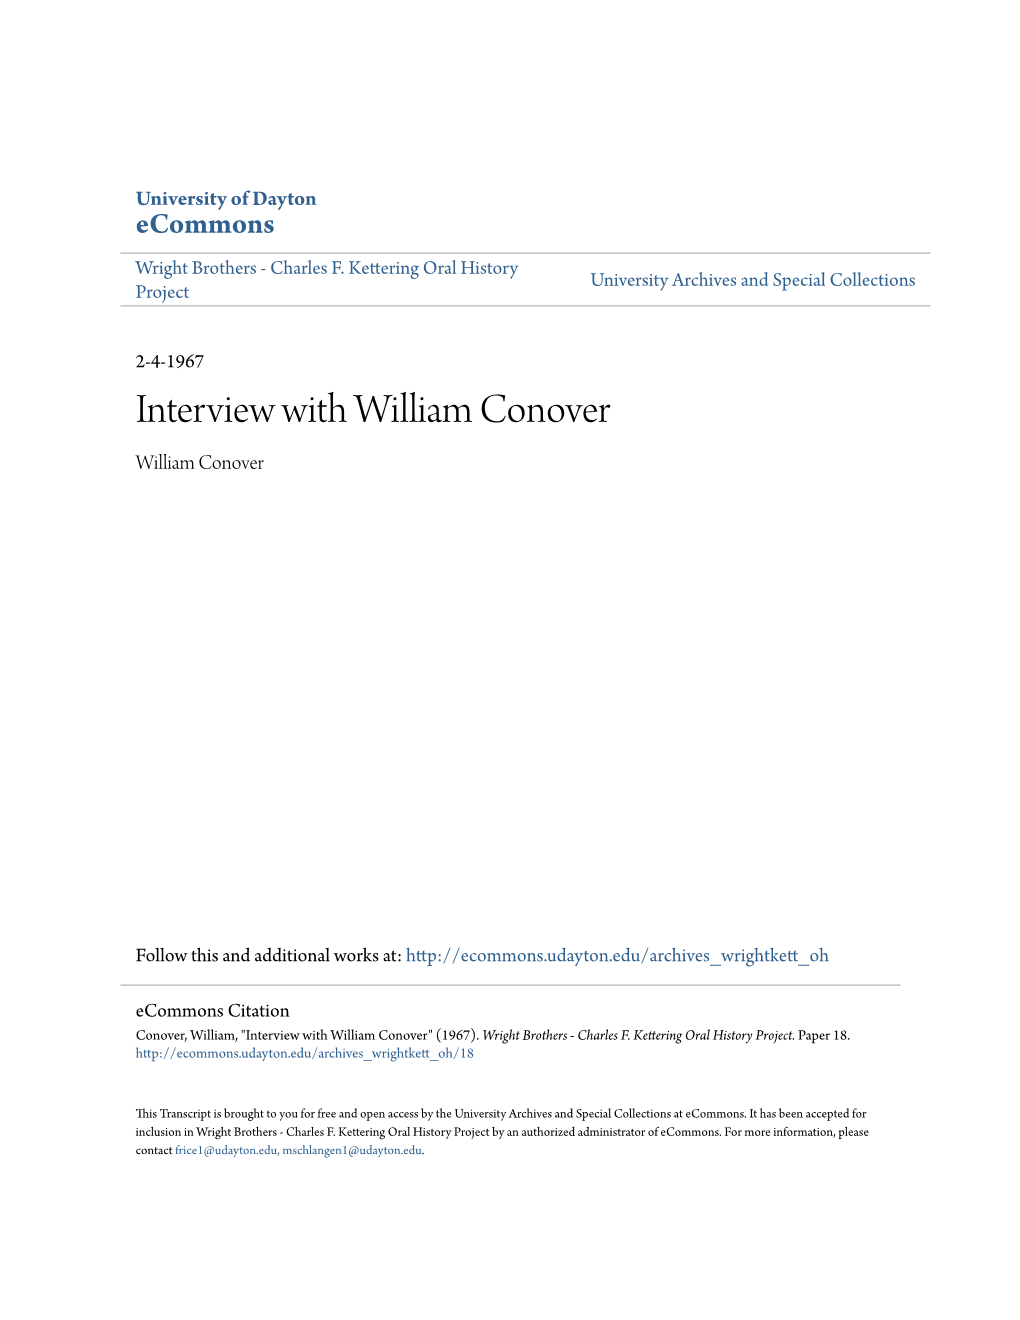 Interview with William Conover William Conover